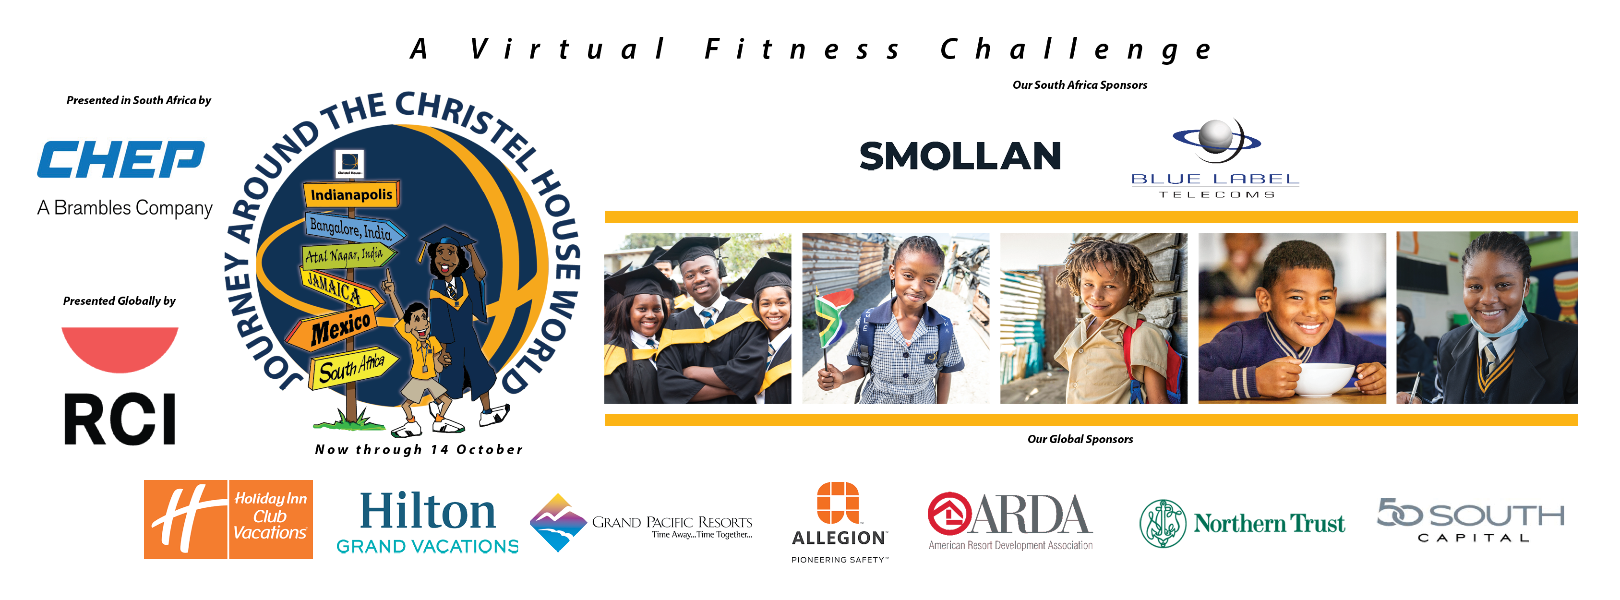 2022 Virtual Journey Around the Christel House World - Christel House South Africa Virtual Fitness Challenge